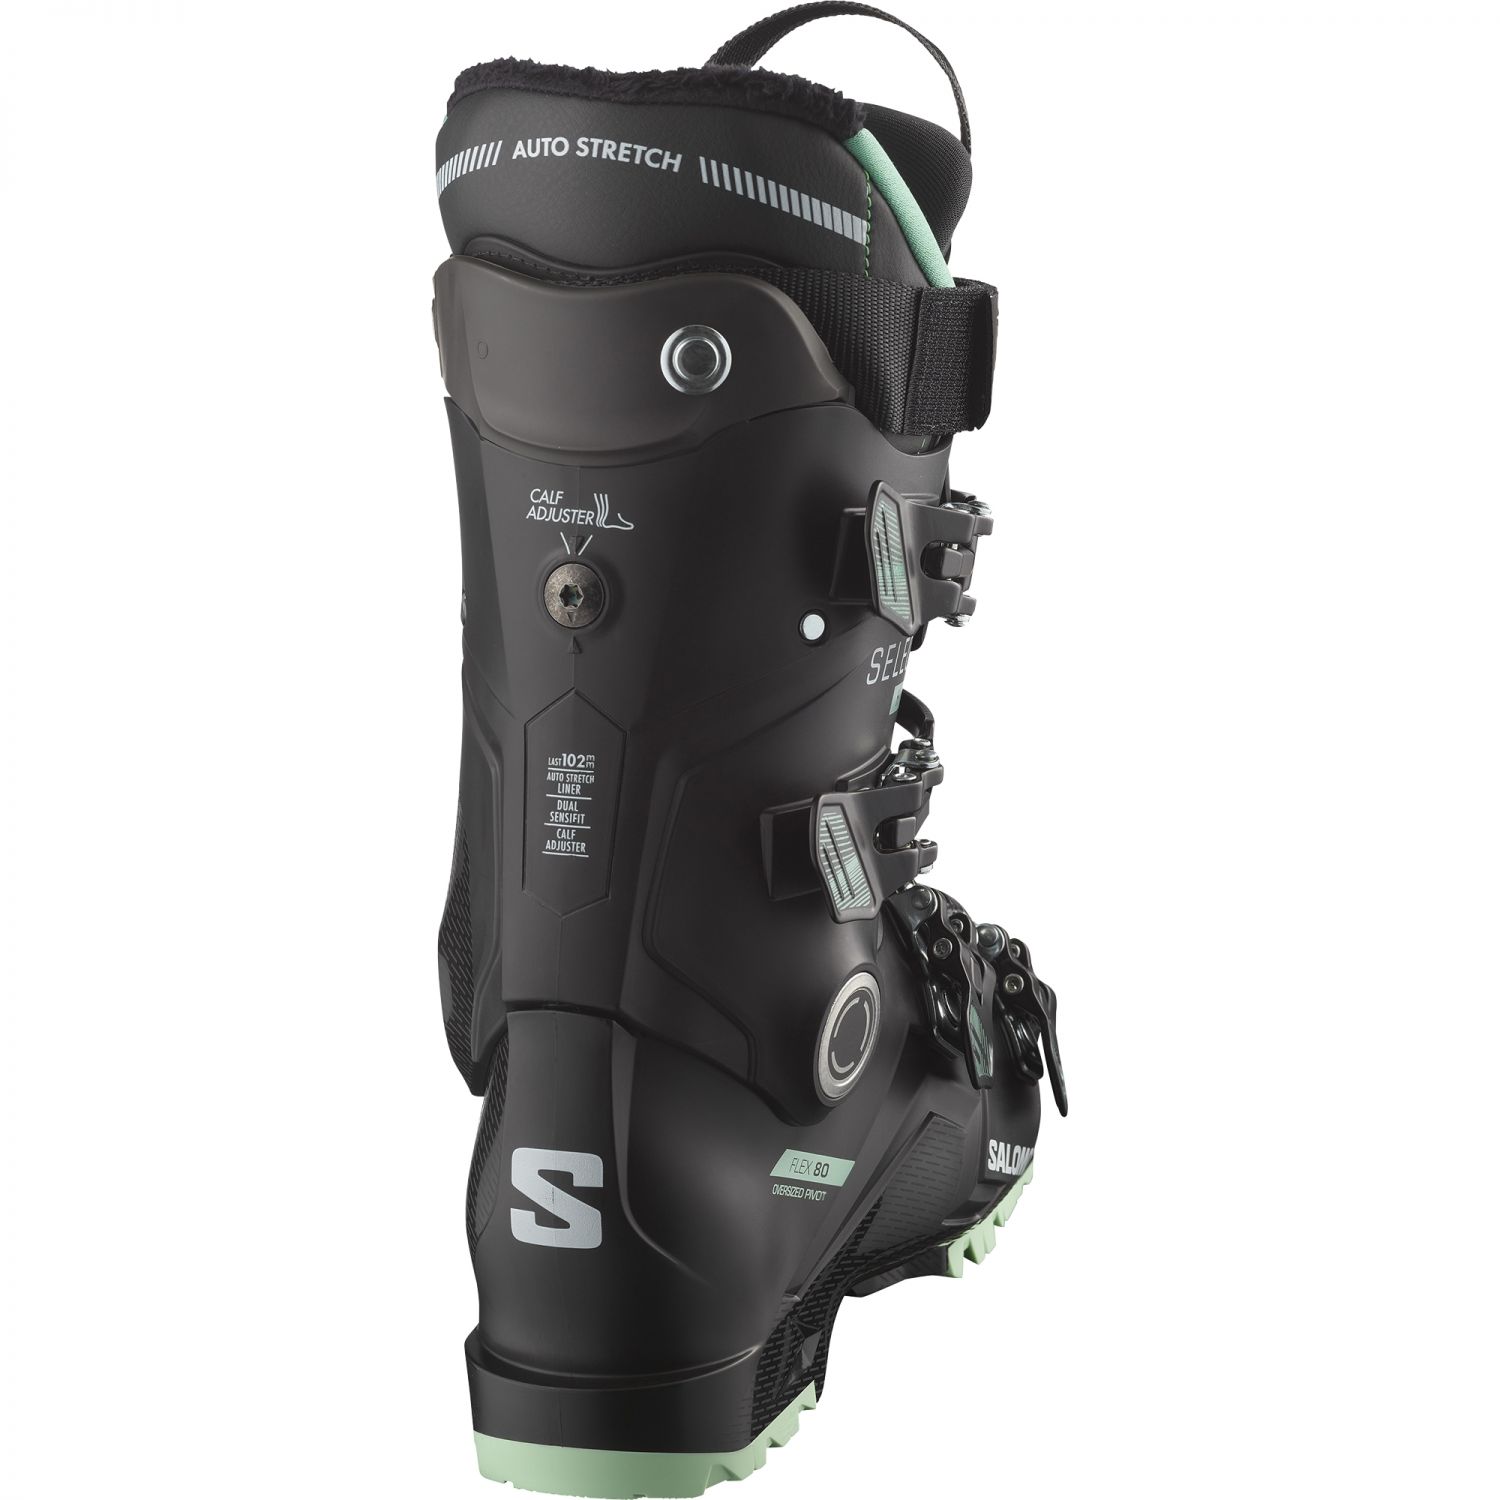 Salomon Select HV 80 W GW, skischoenen, dame, zwart/groen/wit